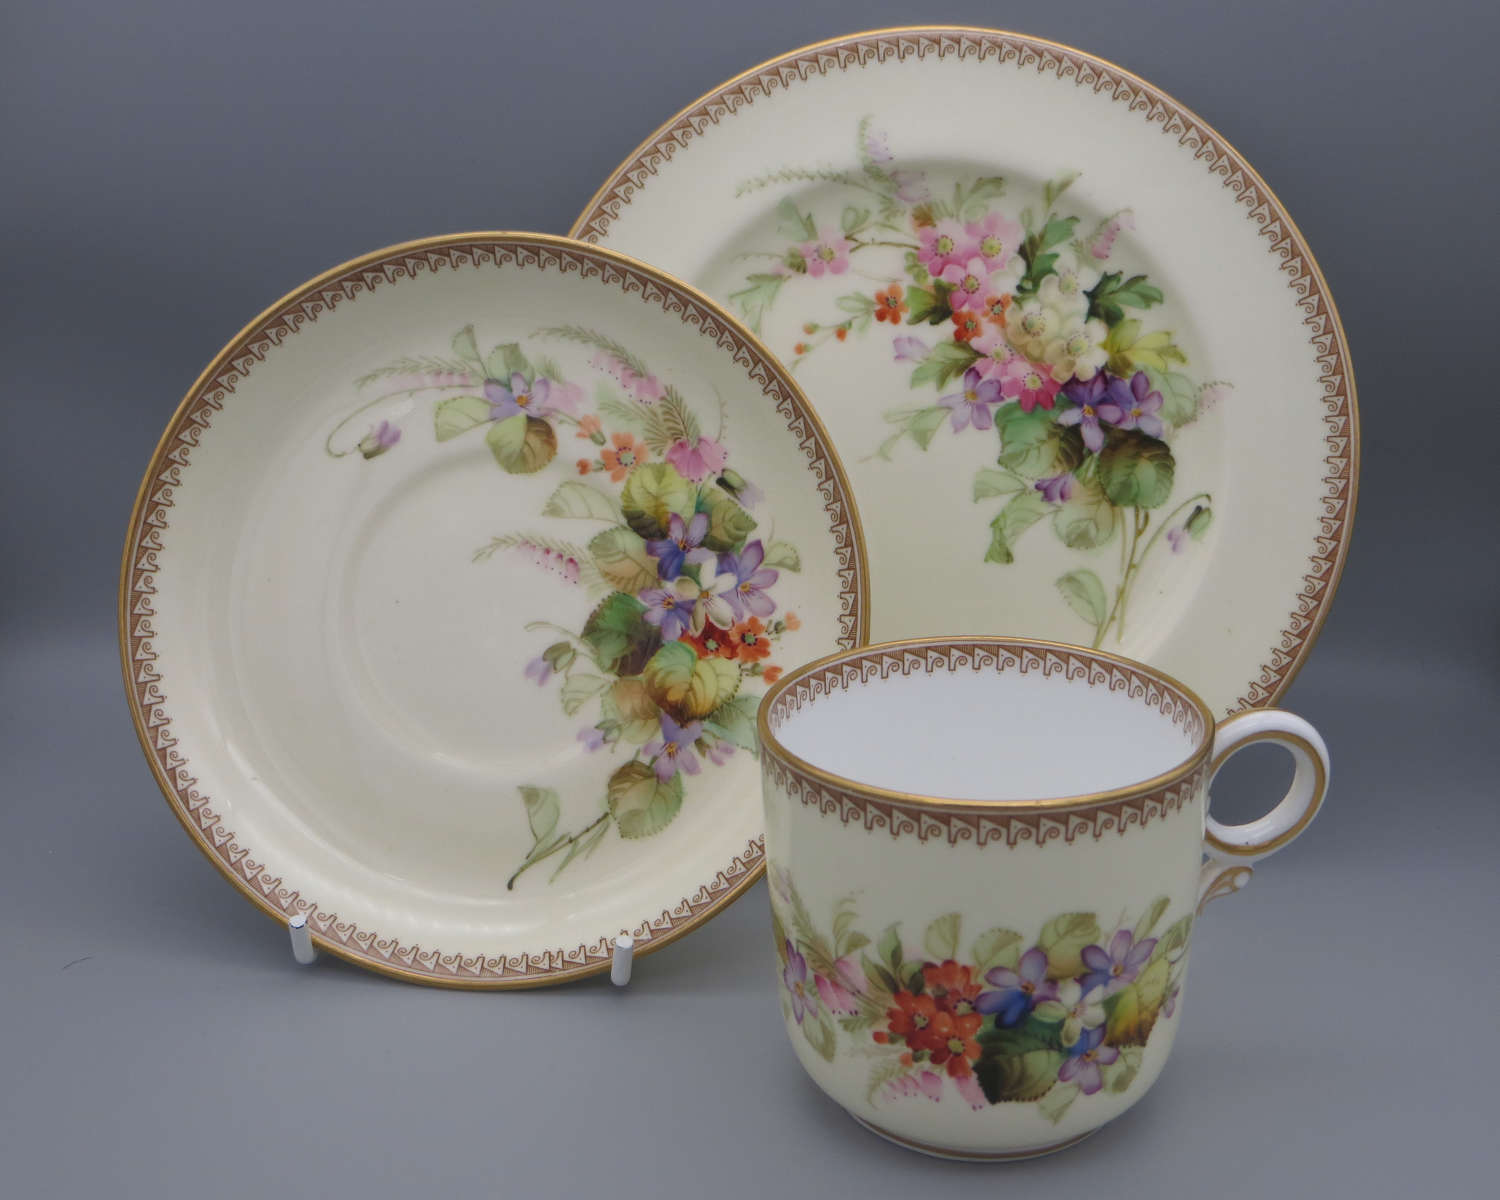 19th century Royal Worcester tea service setting